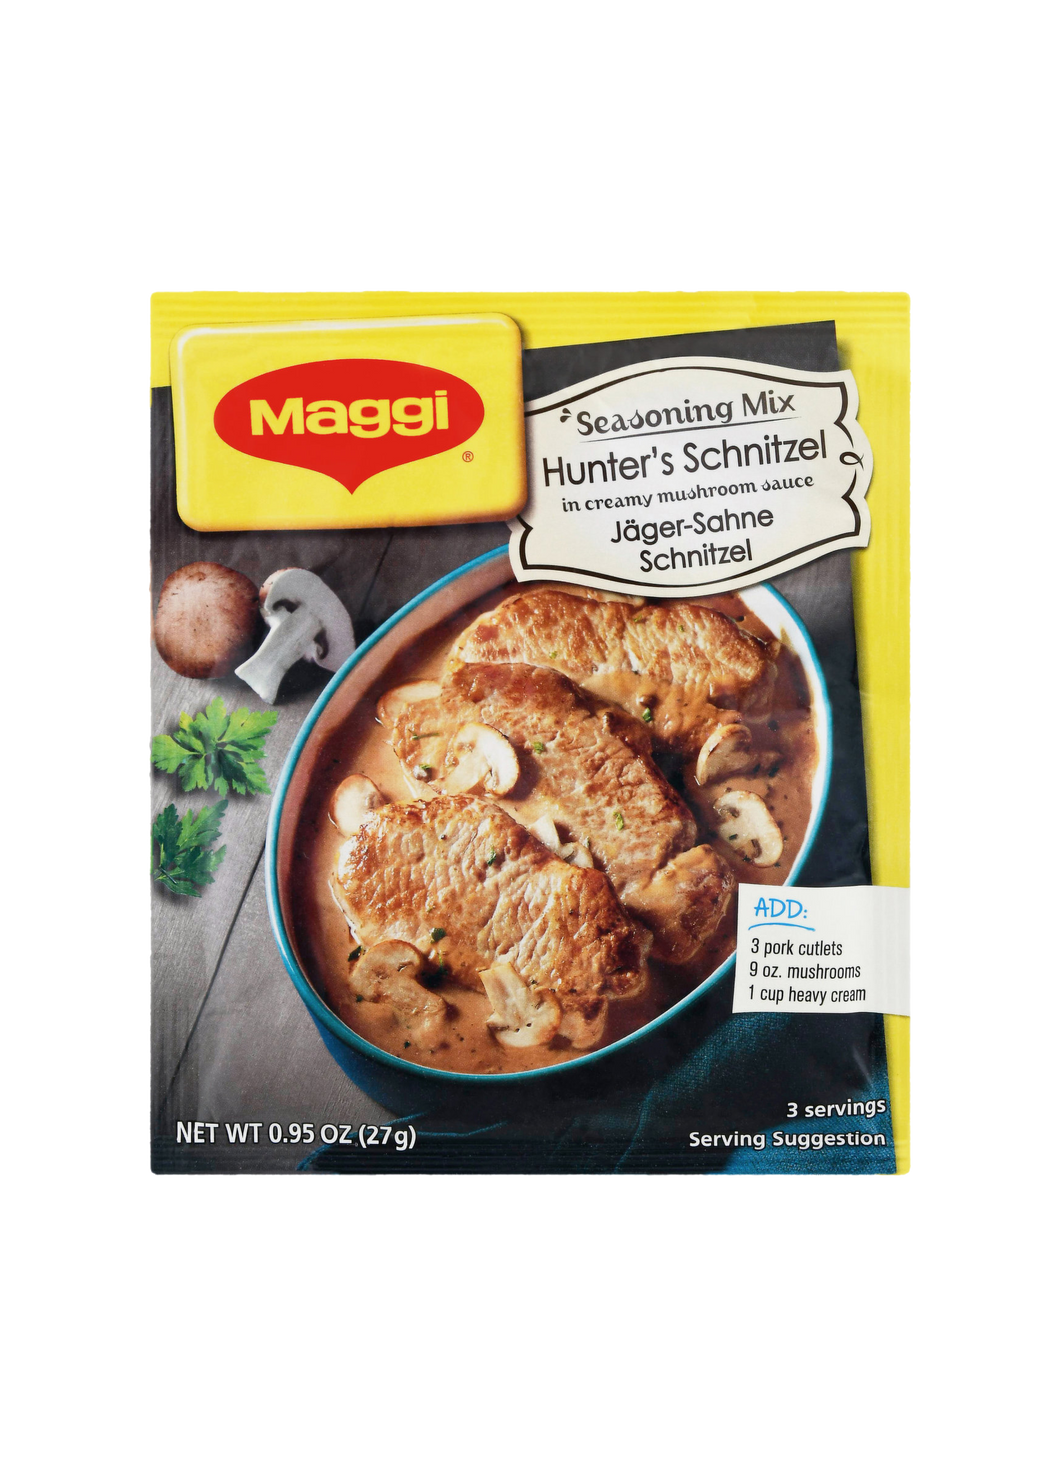 Maggi Seasoning Mix Hunter's Schnitzel in Creamy Mushroom Sauce 27g